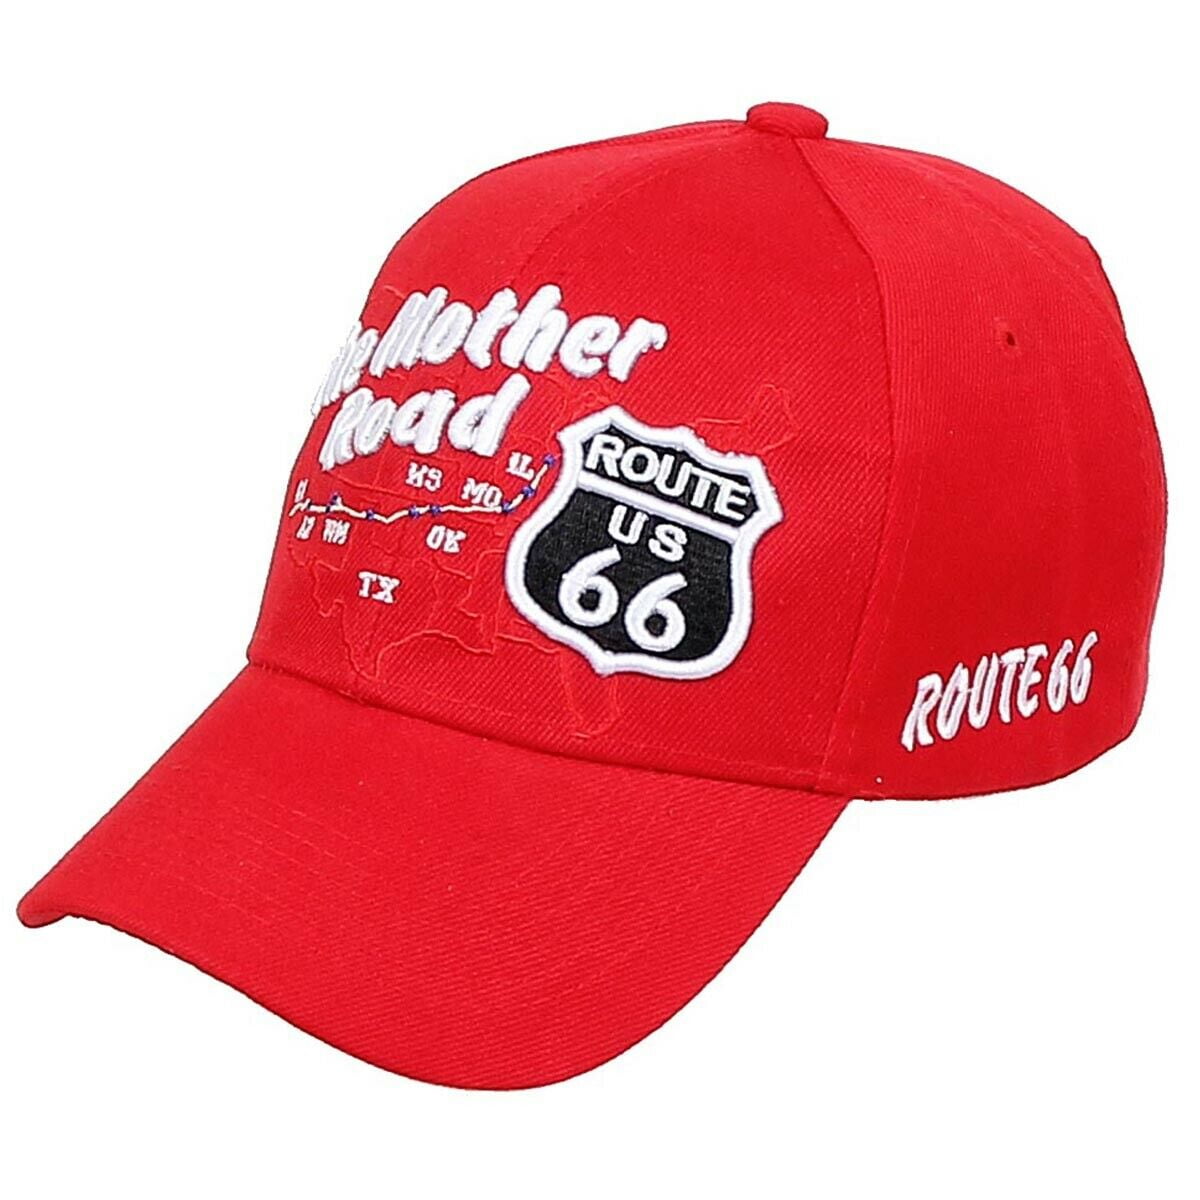 Baseball Cap Snapback Fashion Dad Hat Adjustable Mesh Trucker Caps Route 66 